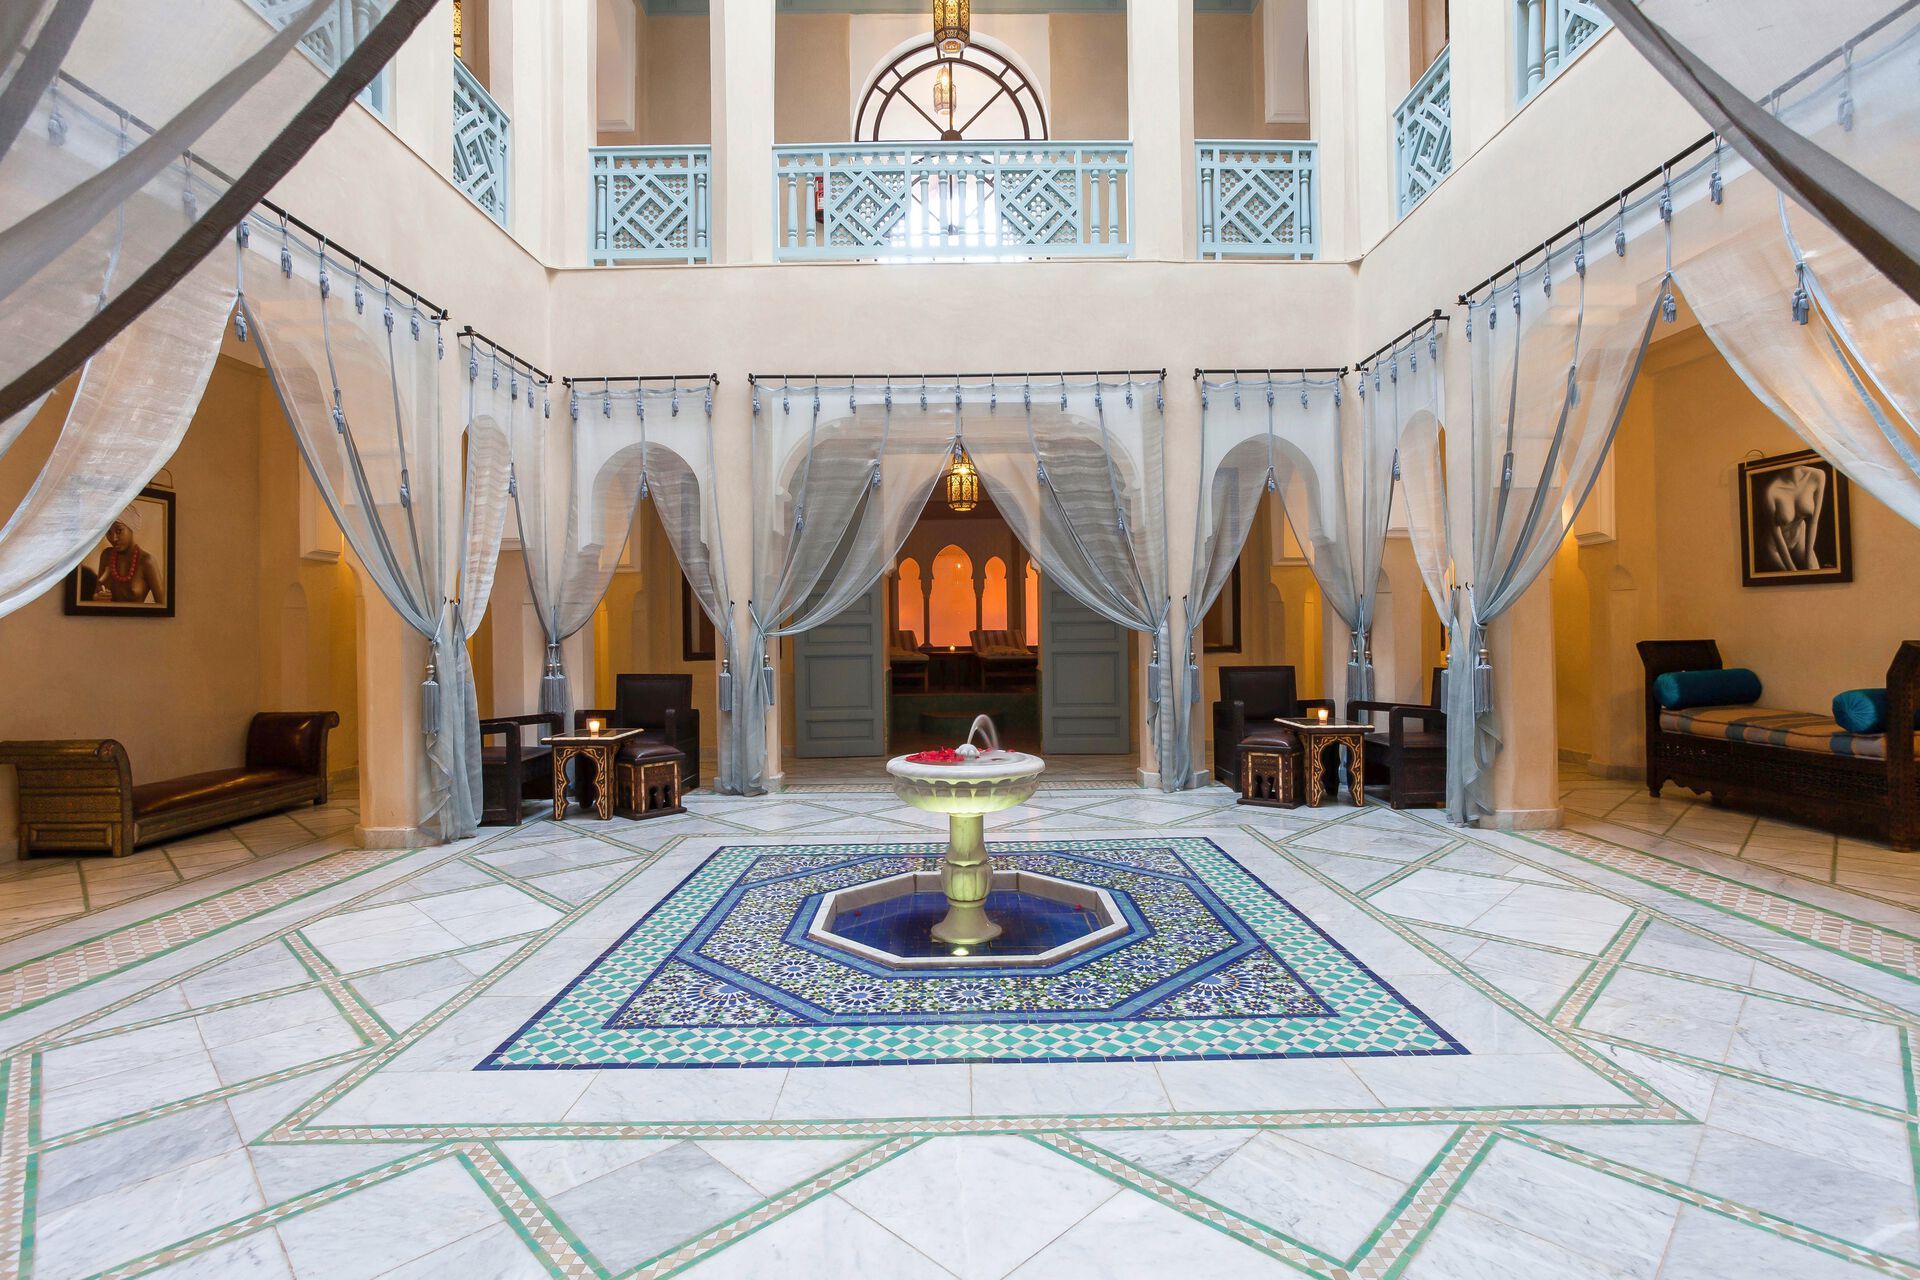 Maroc - Marrakech - Les Jardins de L'Agdal Hôtel & Spa 5* - Adult Only